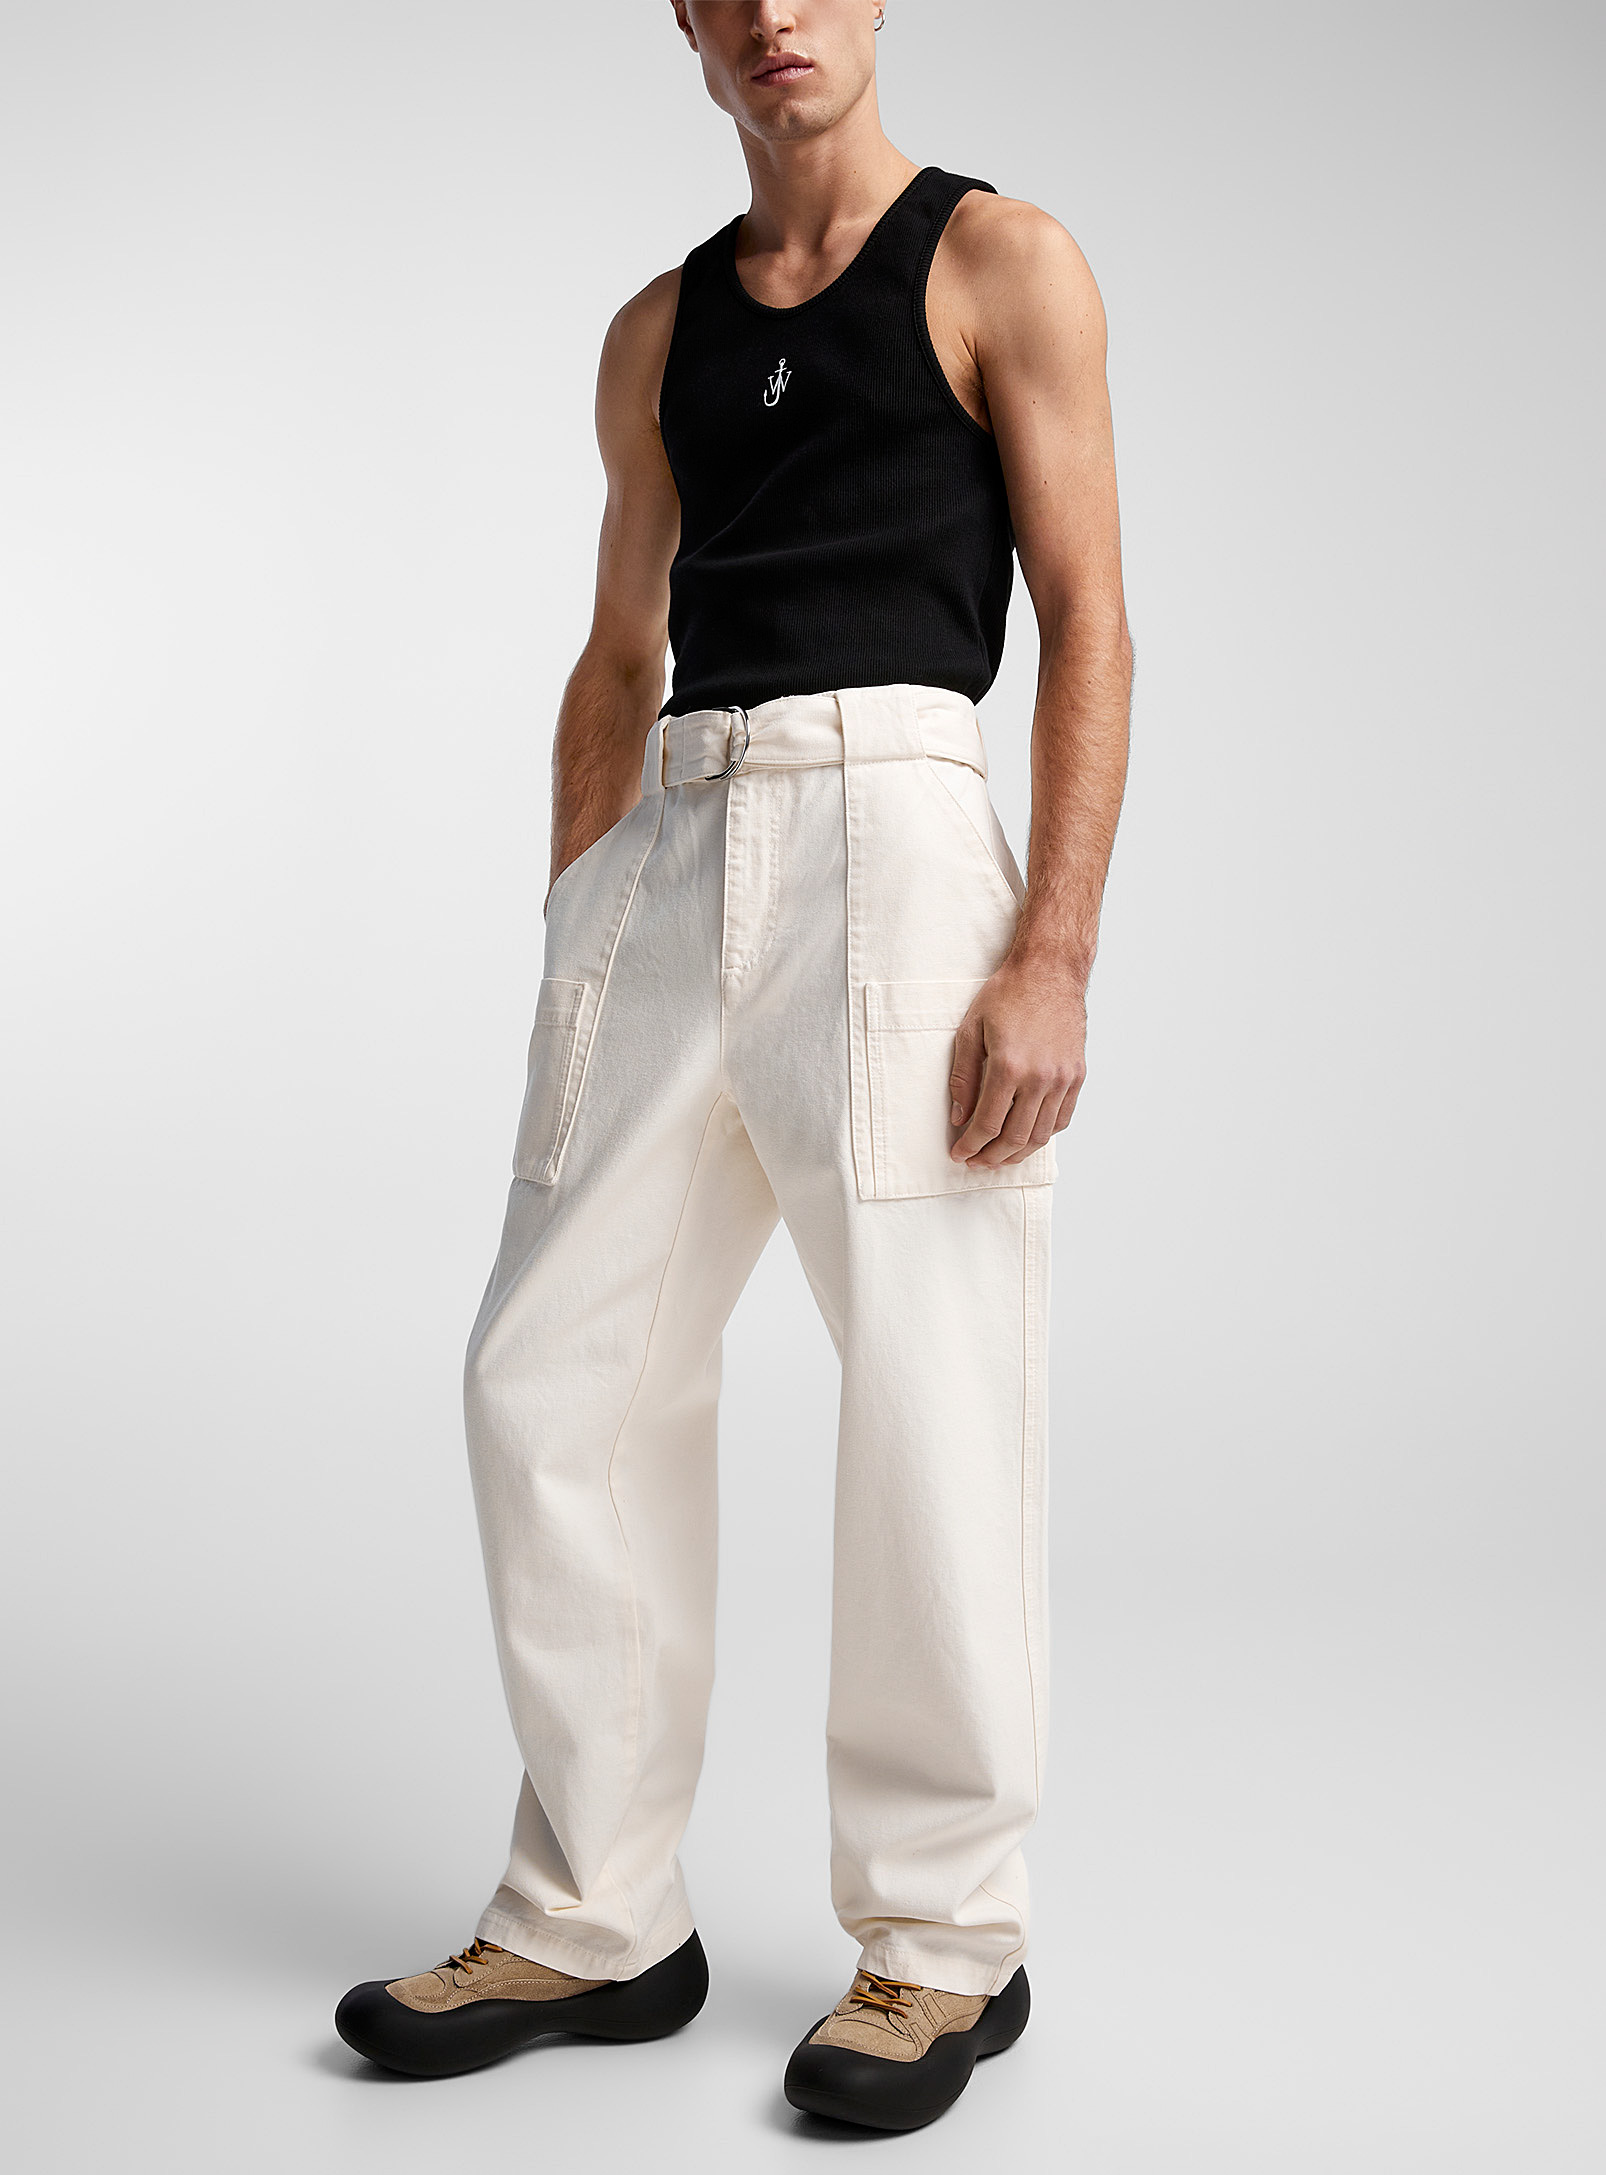 JW Anderson - Le pantalon cargo blanc vanille